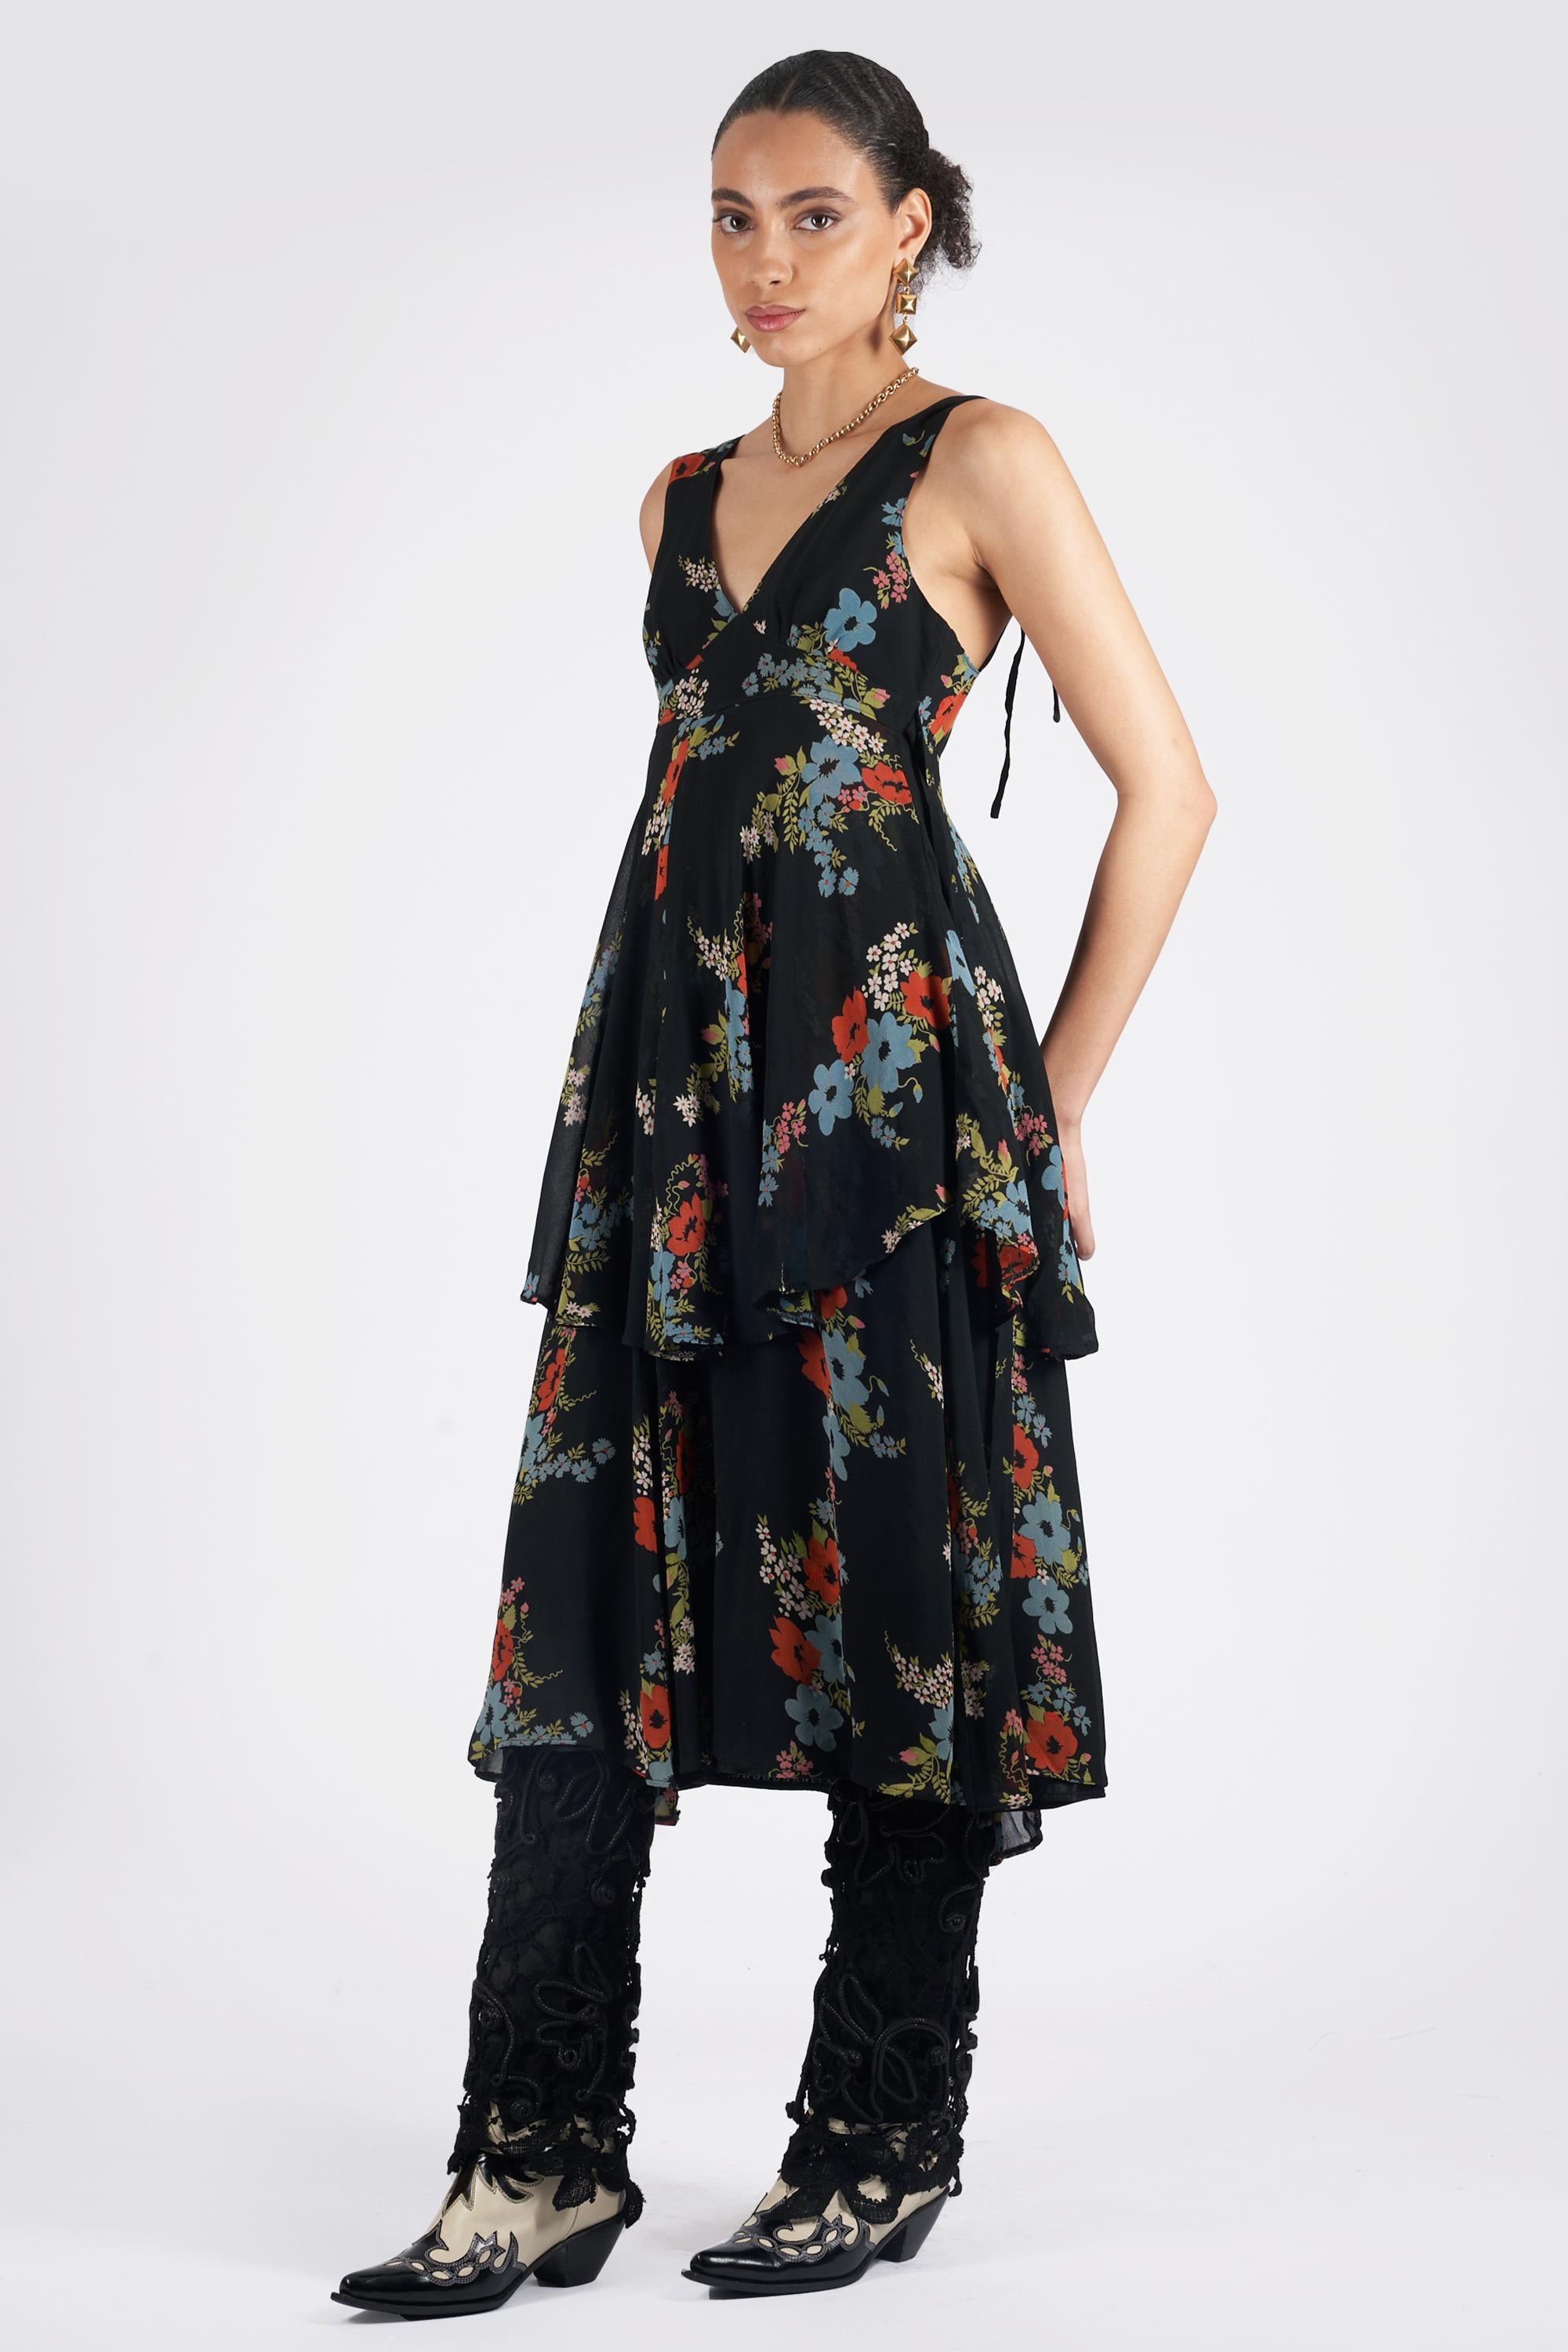 Black Ossie Clark Vintage 1970’s Sleeveless Floral Layered Dress